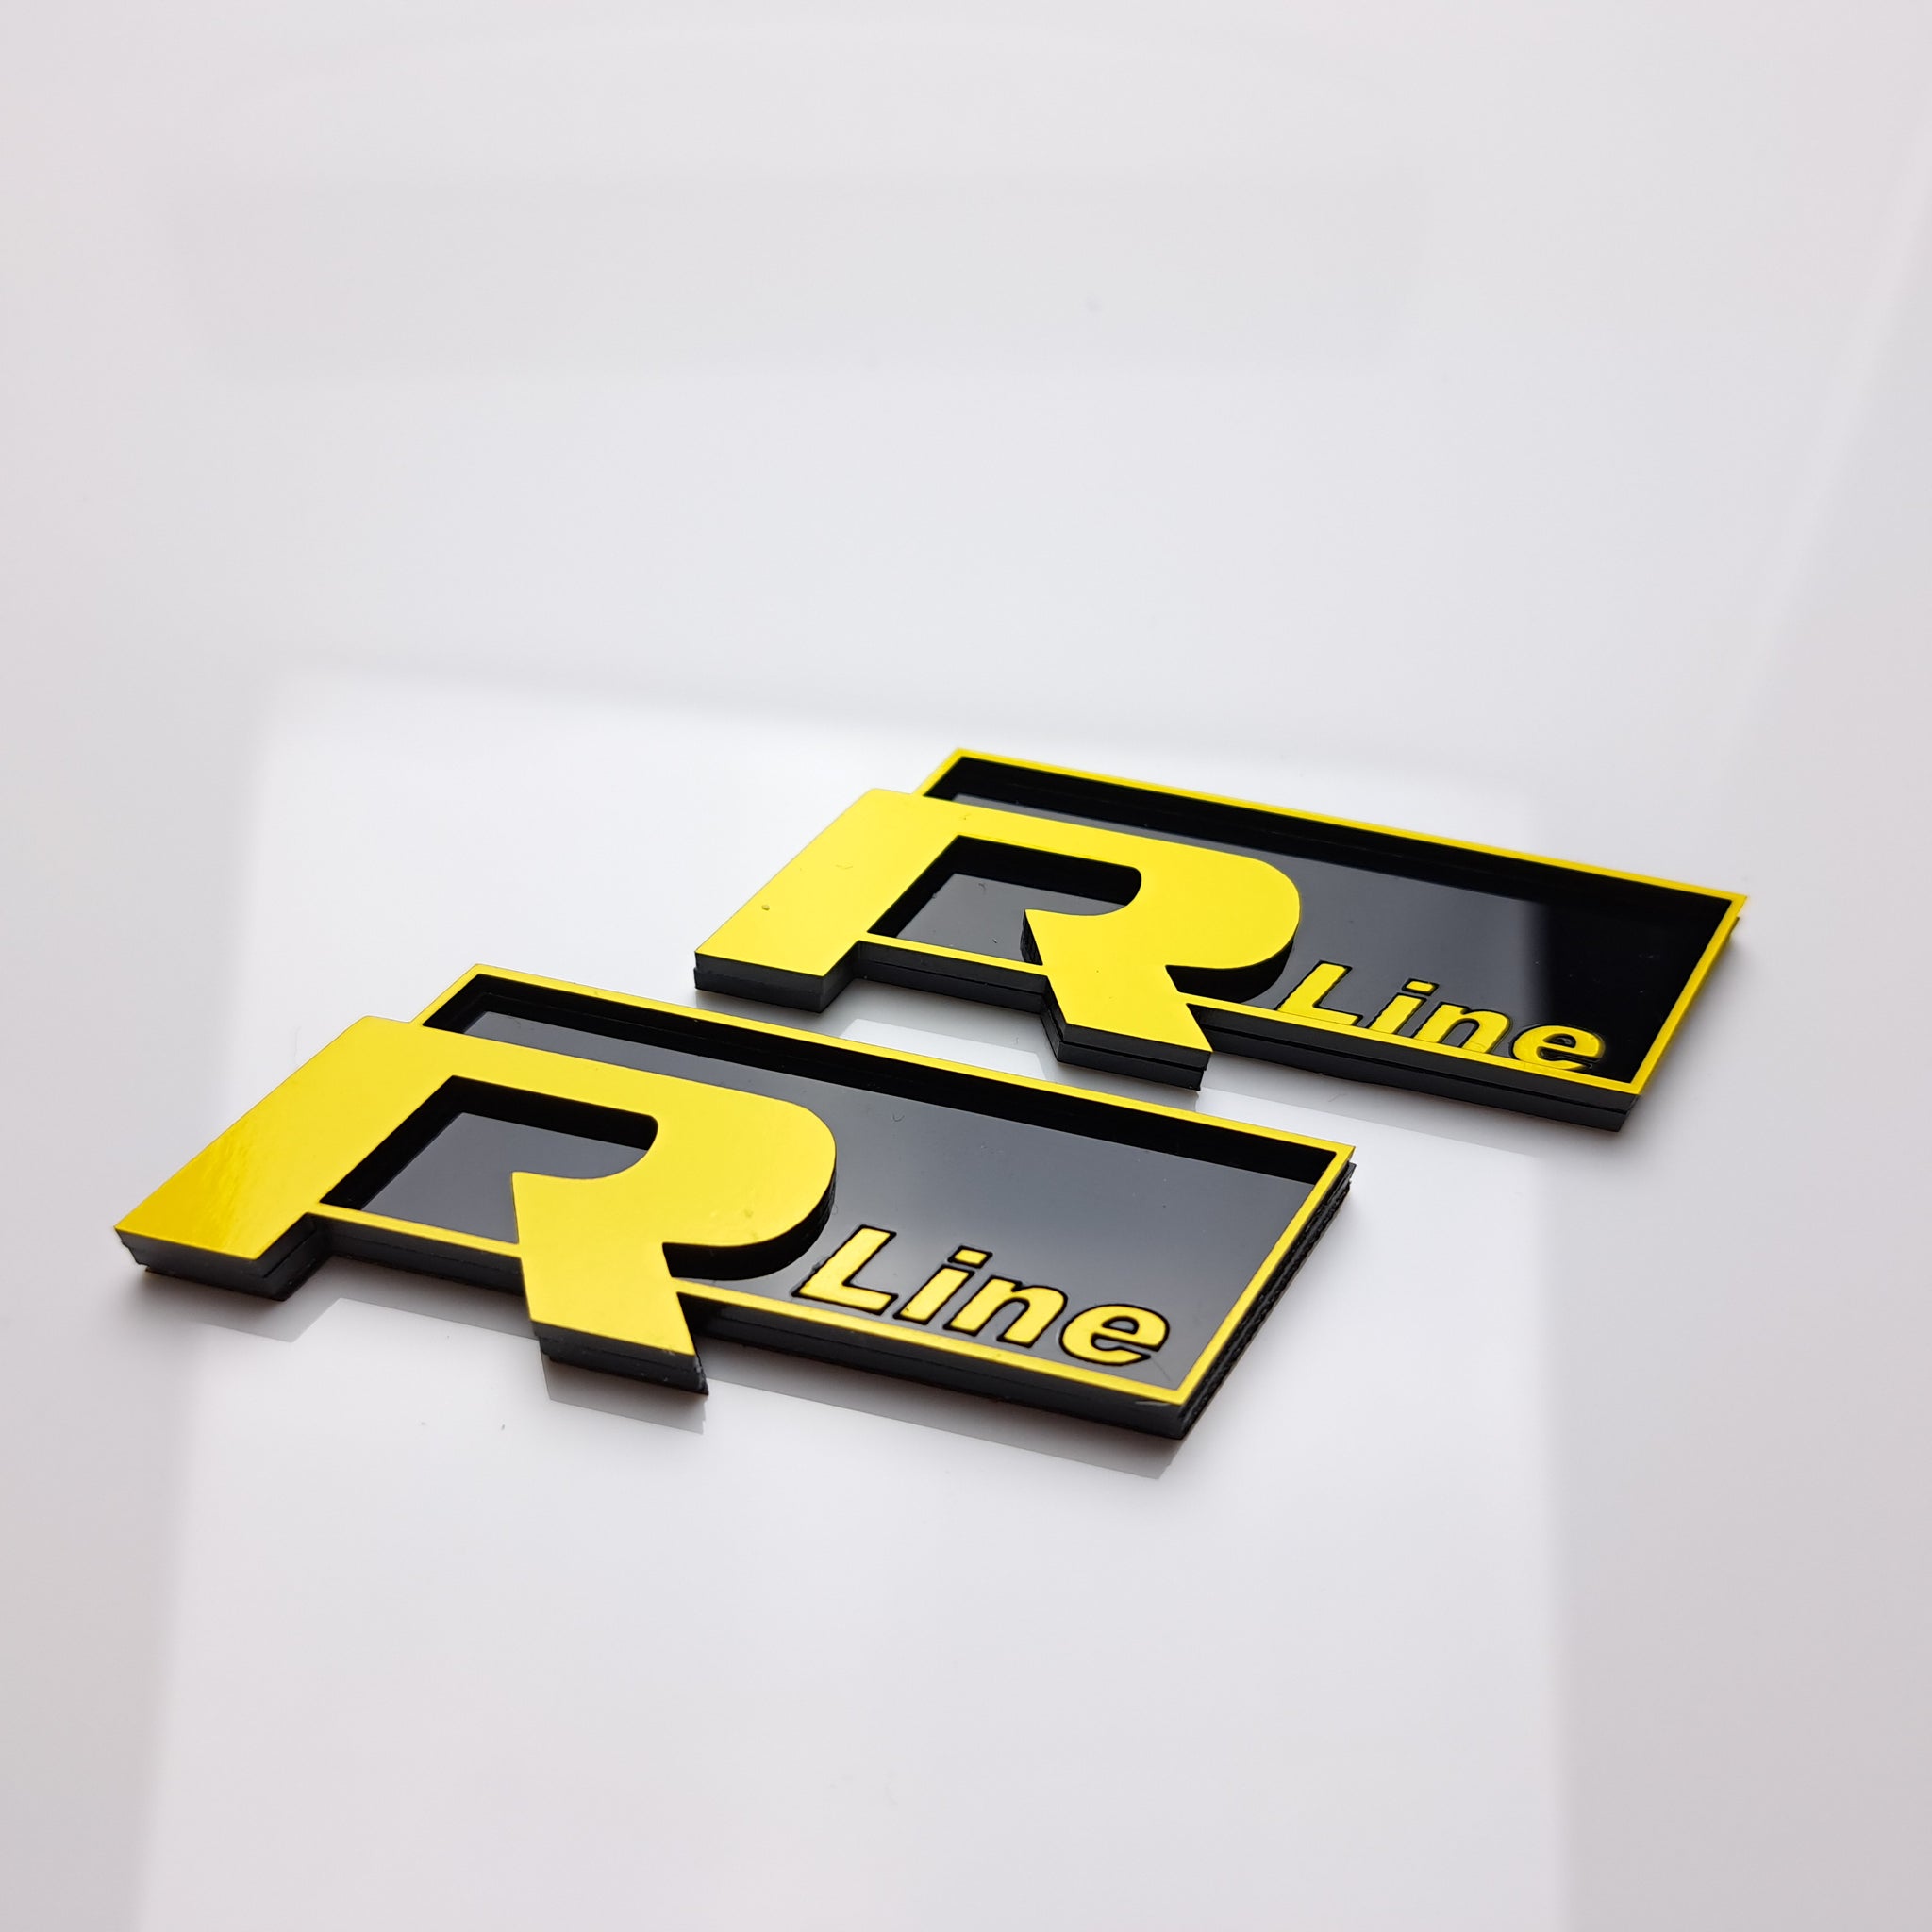 R Line Badge -  UK